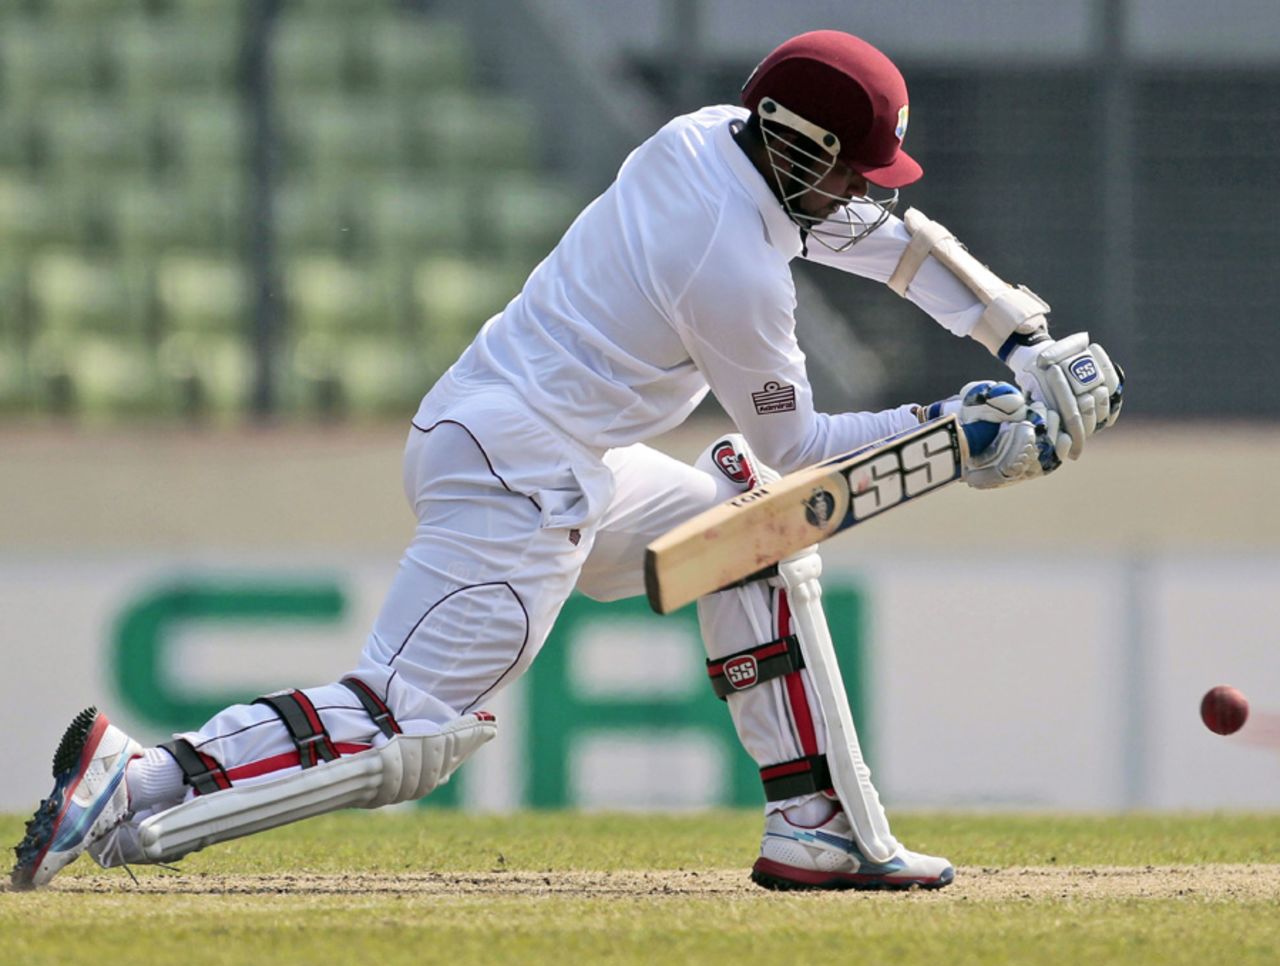 Denesh Ramdin made his second Test hundred in 2012, Bangladesh v West Indies, 1st Test, Mirpur, 2nd day, November 14, 2012